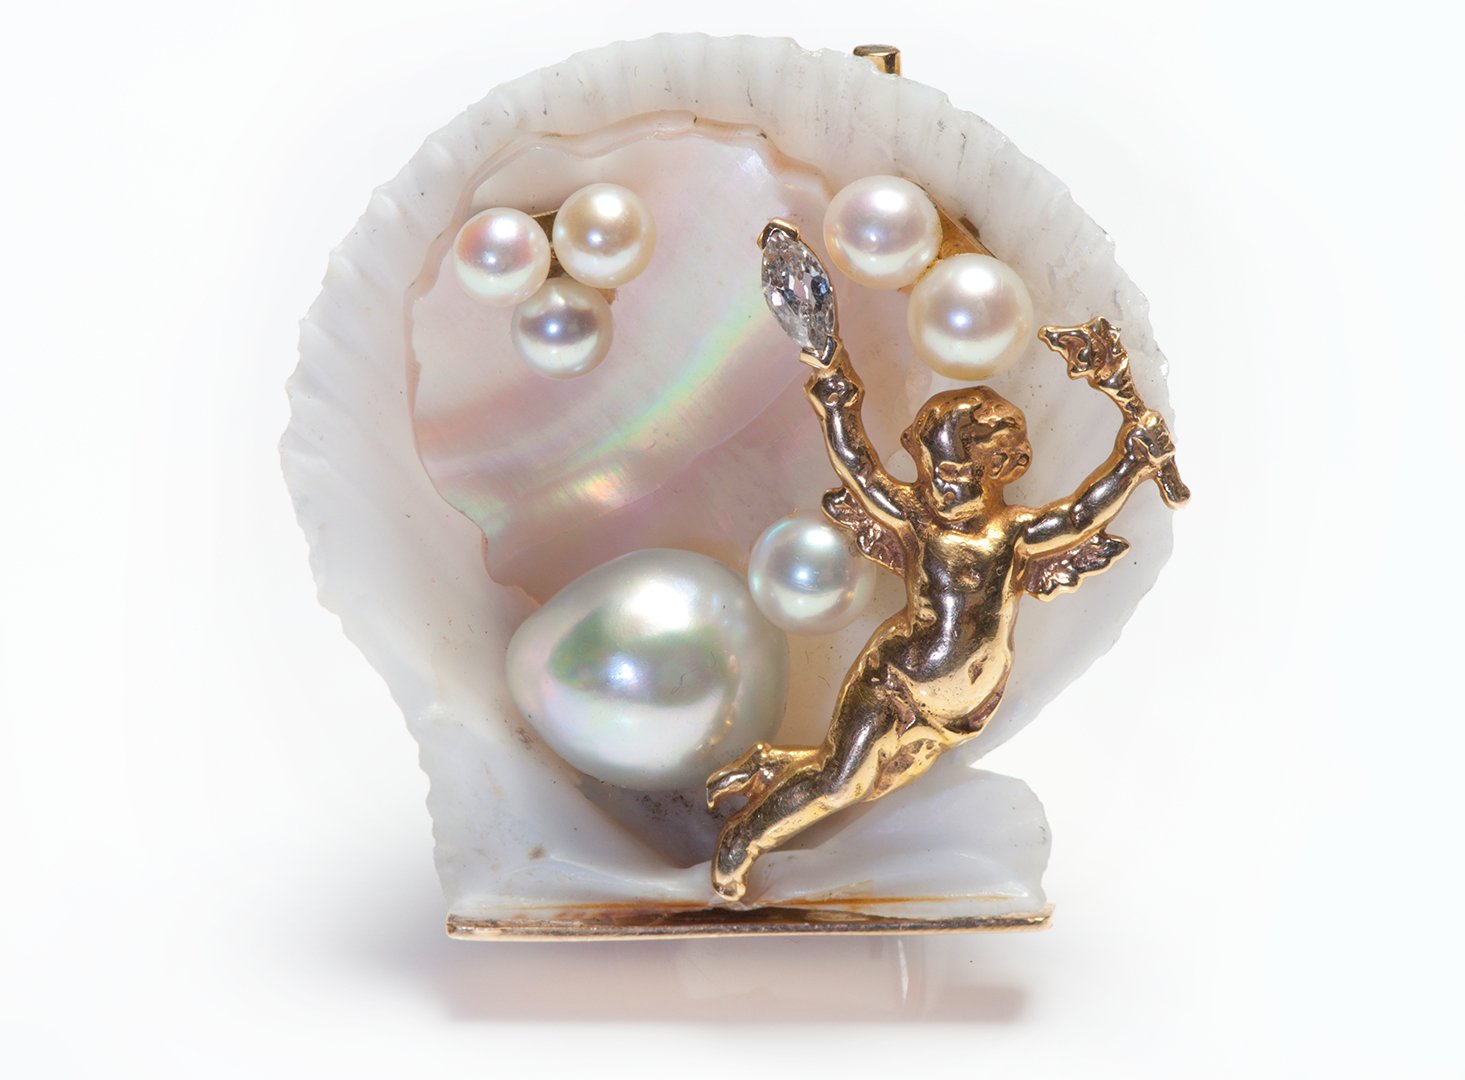 Seaman Schepps Gold Cherub Shell Pearl Marquise Diamond Brooch